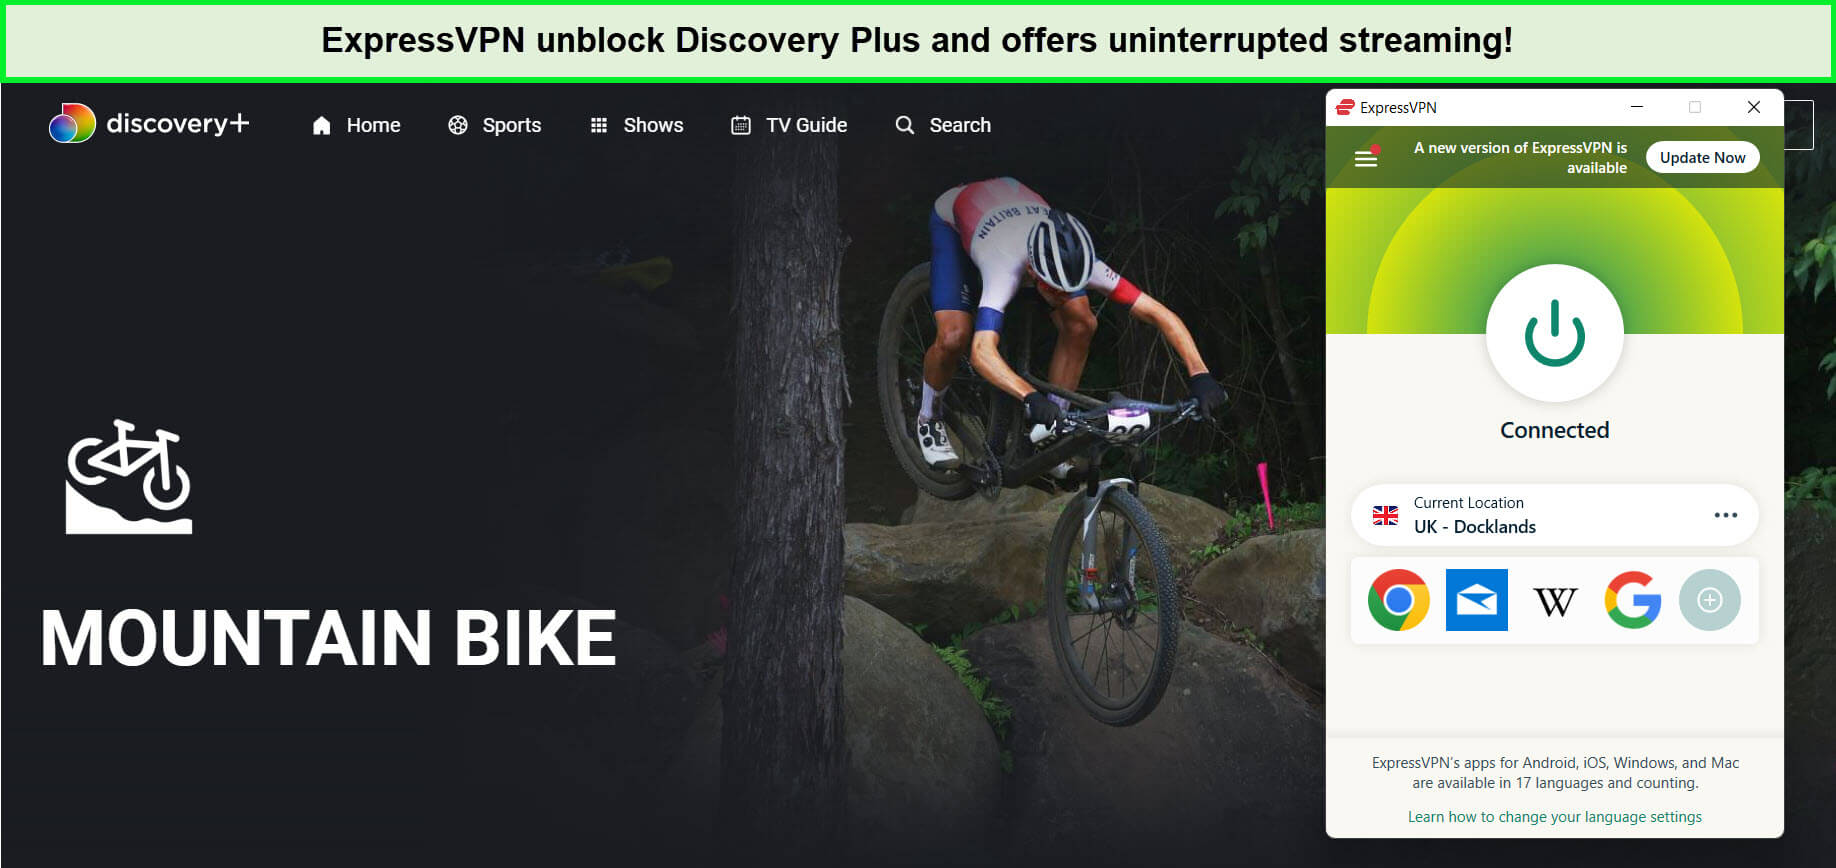 expressvpn-unblocks-uci-mountain-bike-world-series-in-Canada-discovery-plus